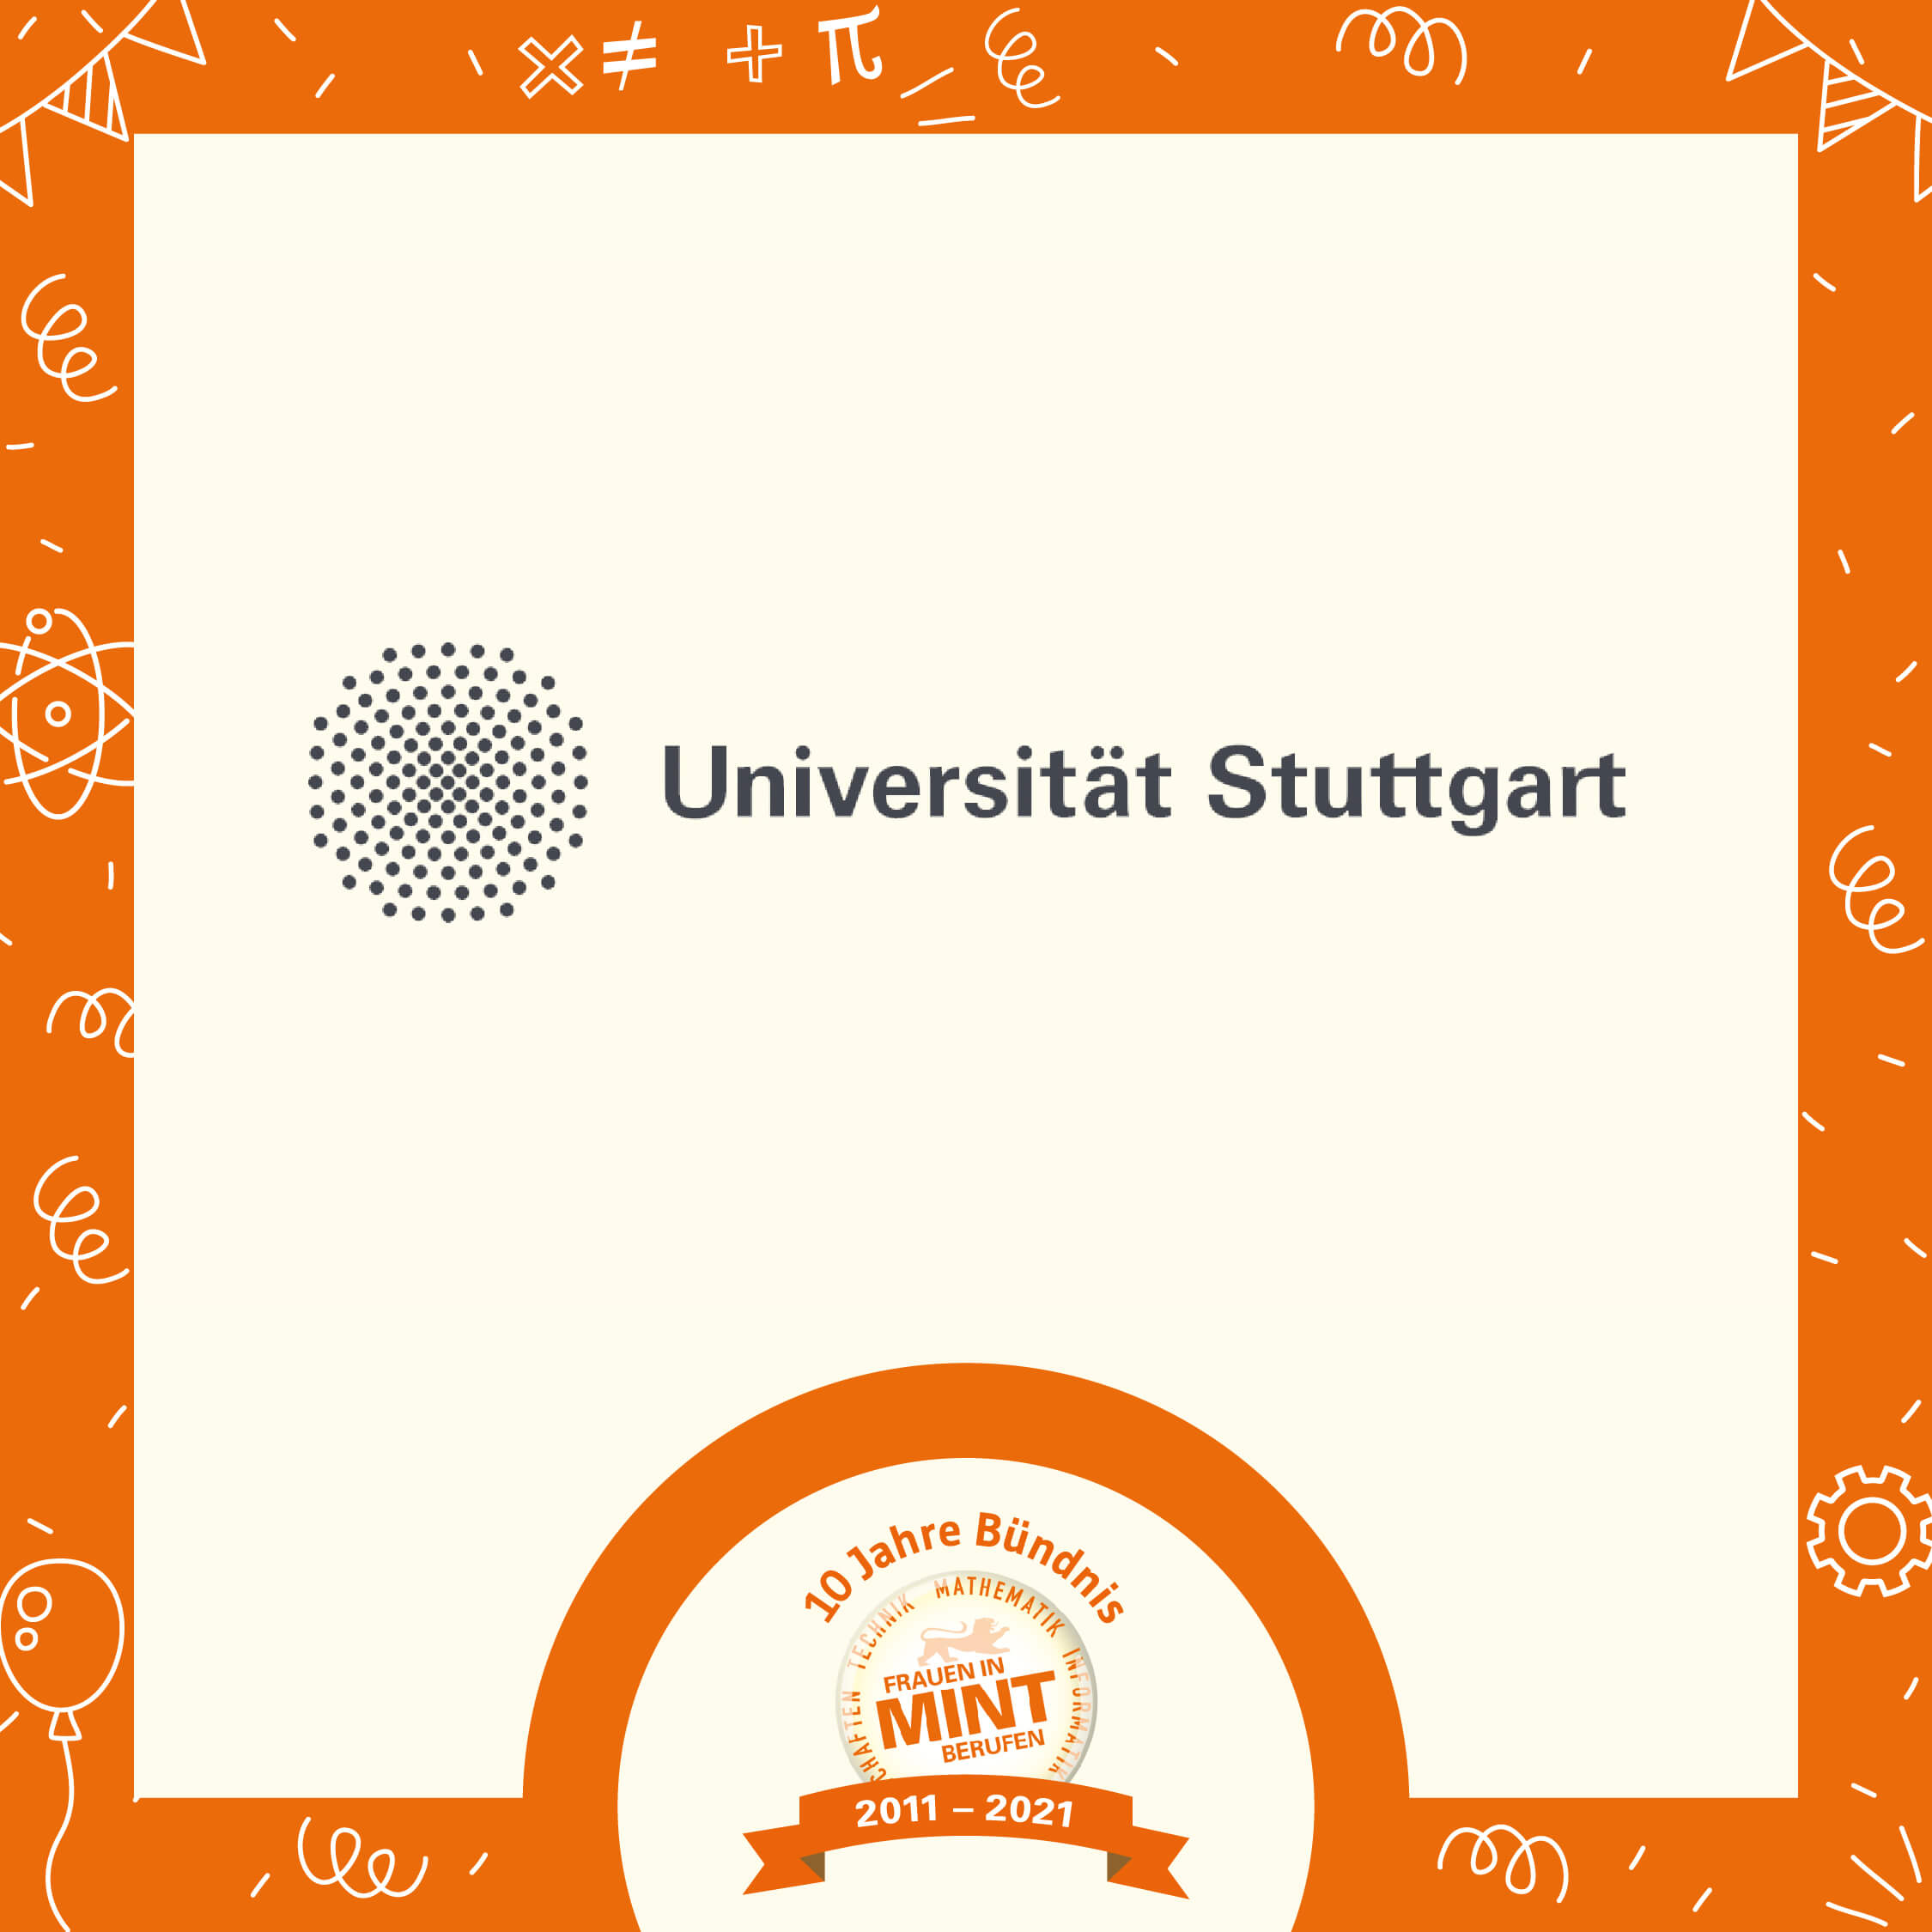 Bündnispartner: Universität Stuttgart